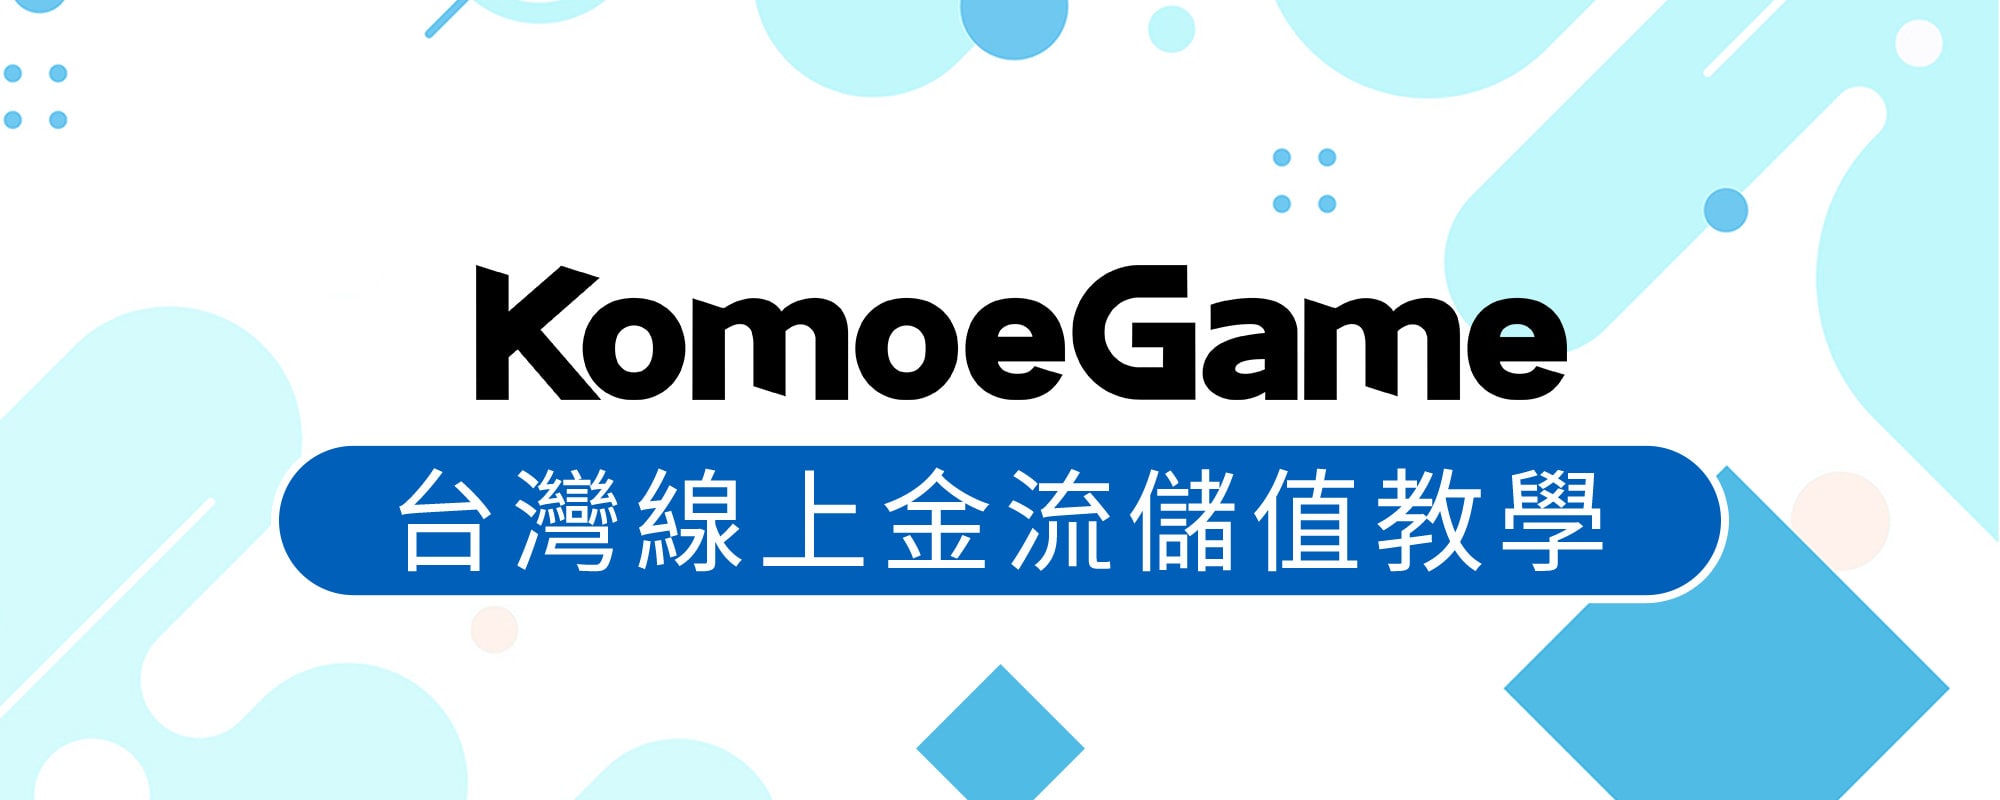   KOMOE GAME儲值 – 台灣地區線上金流